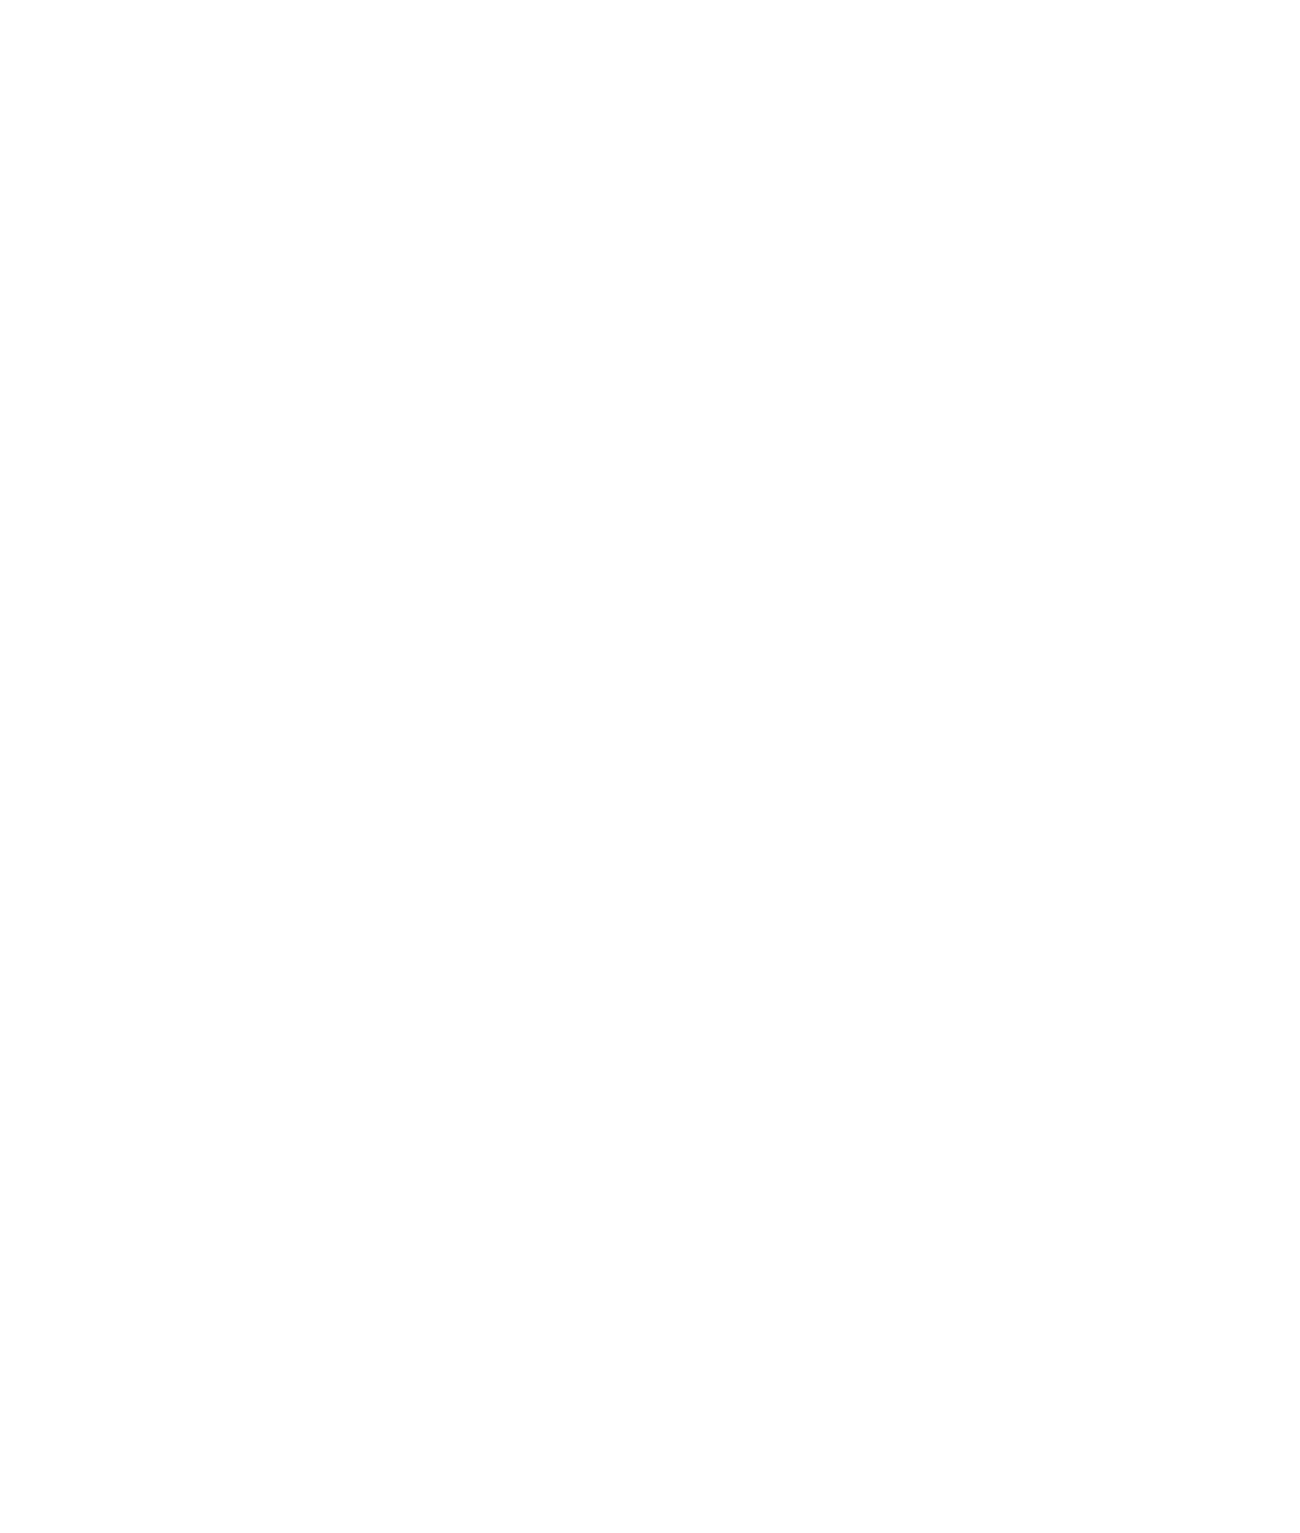 Aterian logo for dark backgrounds (transparent PNG)